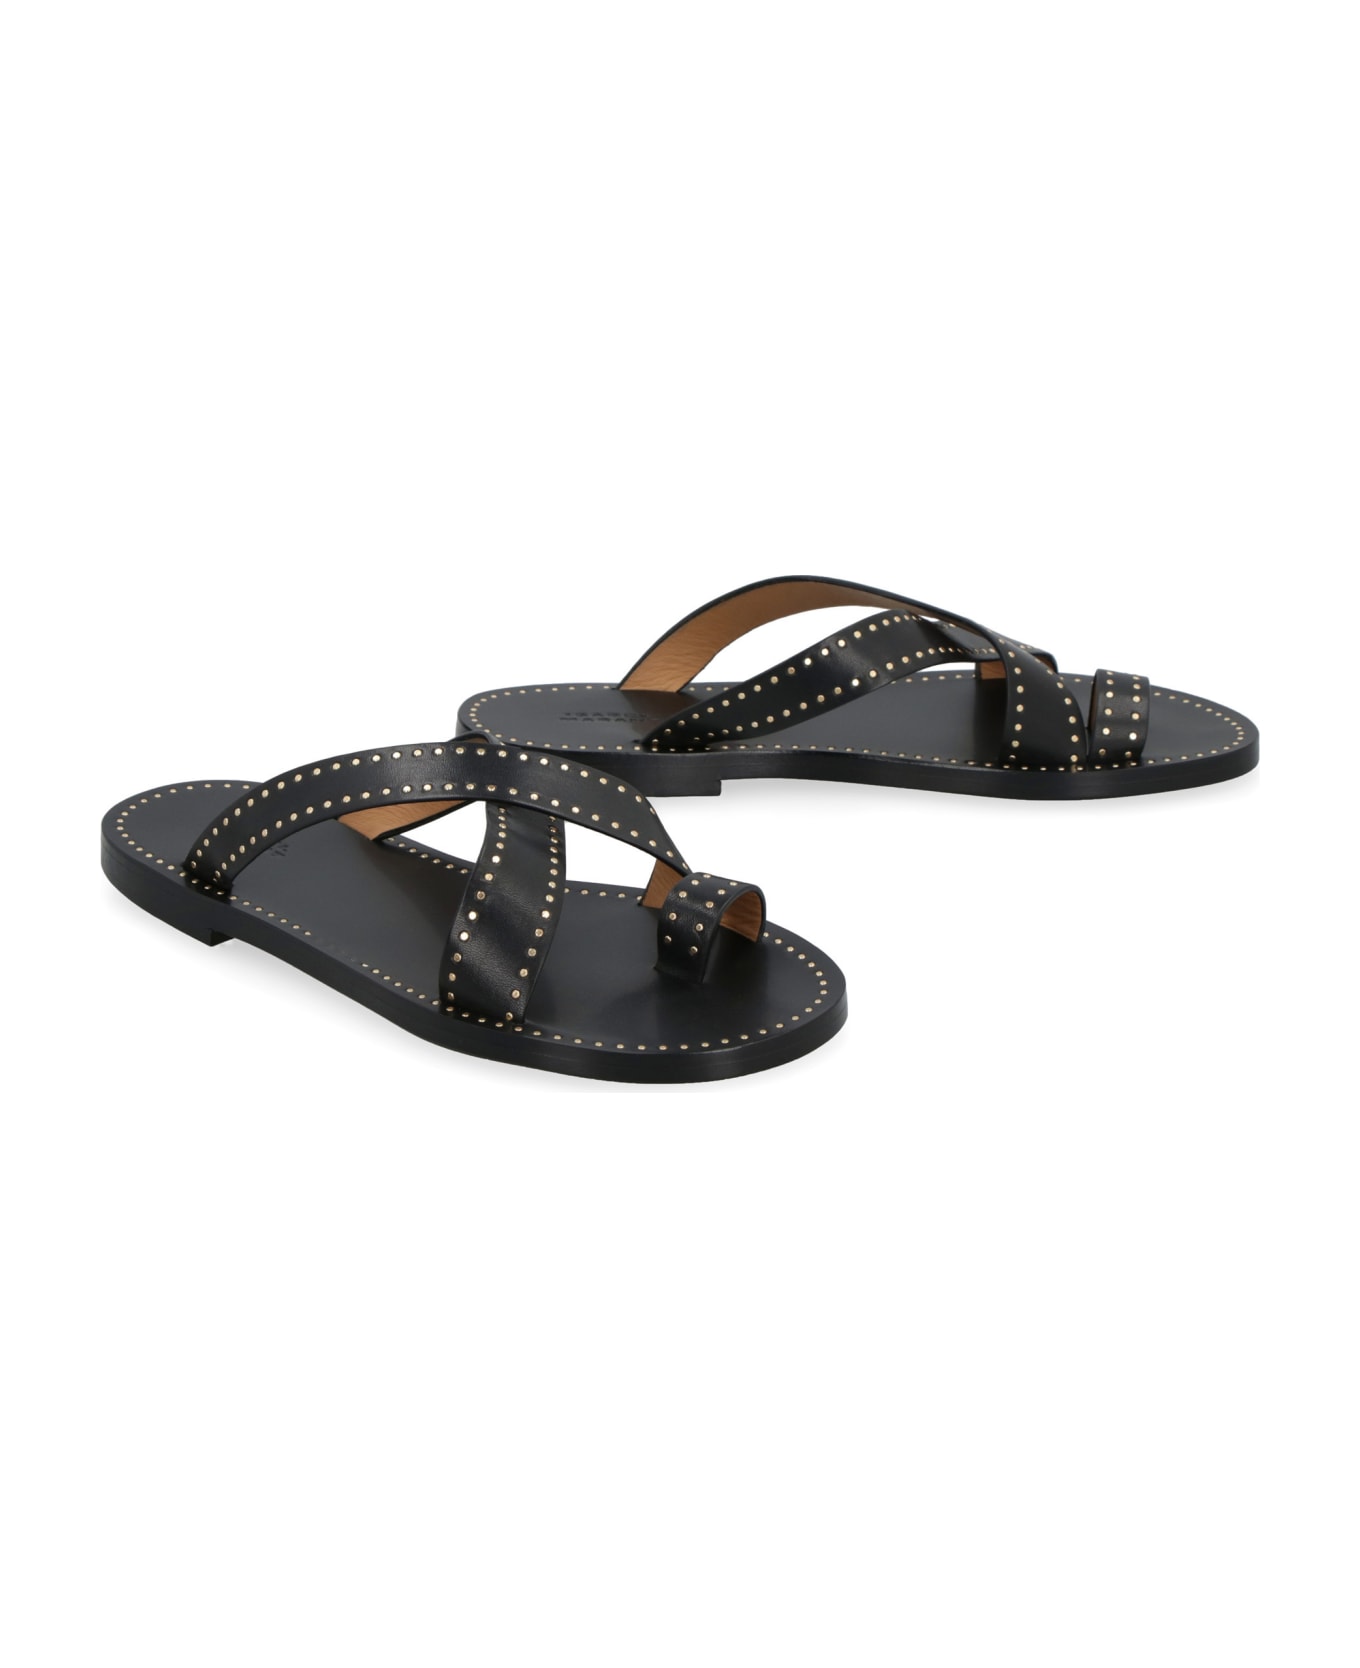 Isabel Marant Jinsay Leather Flat Sandals - black サンダル